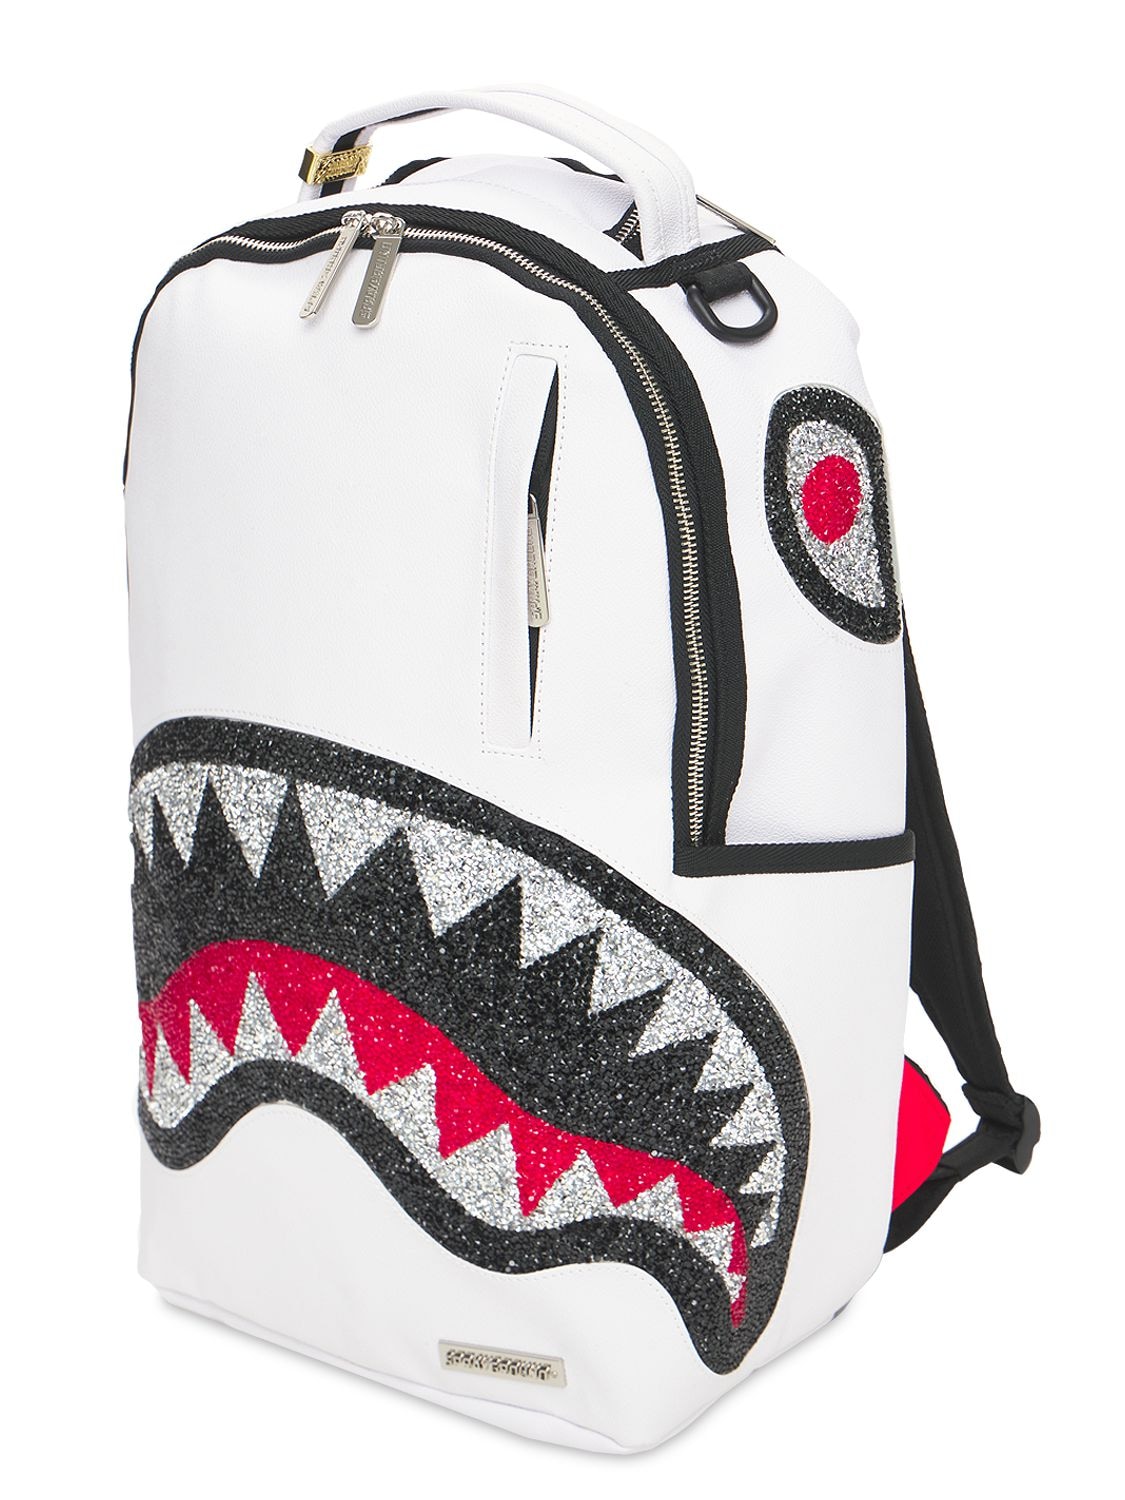 Sprayground Kid Checked Shark teeth-detail Backpack - Farfetch